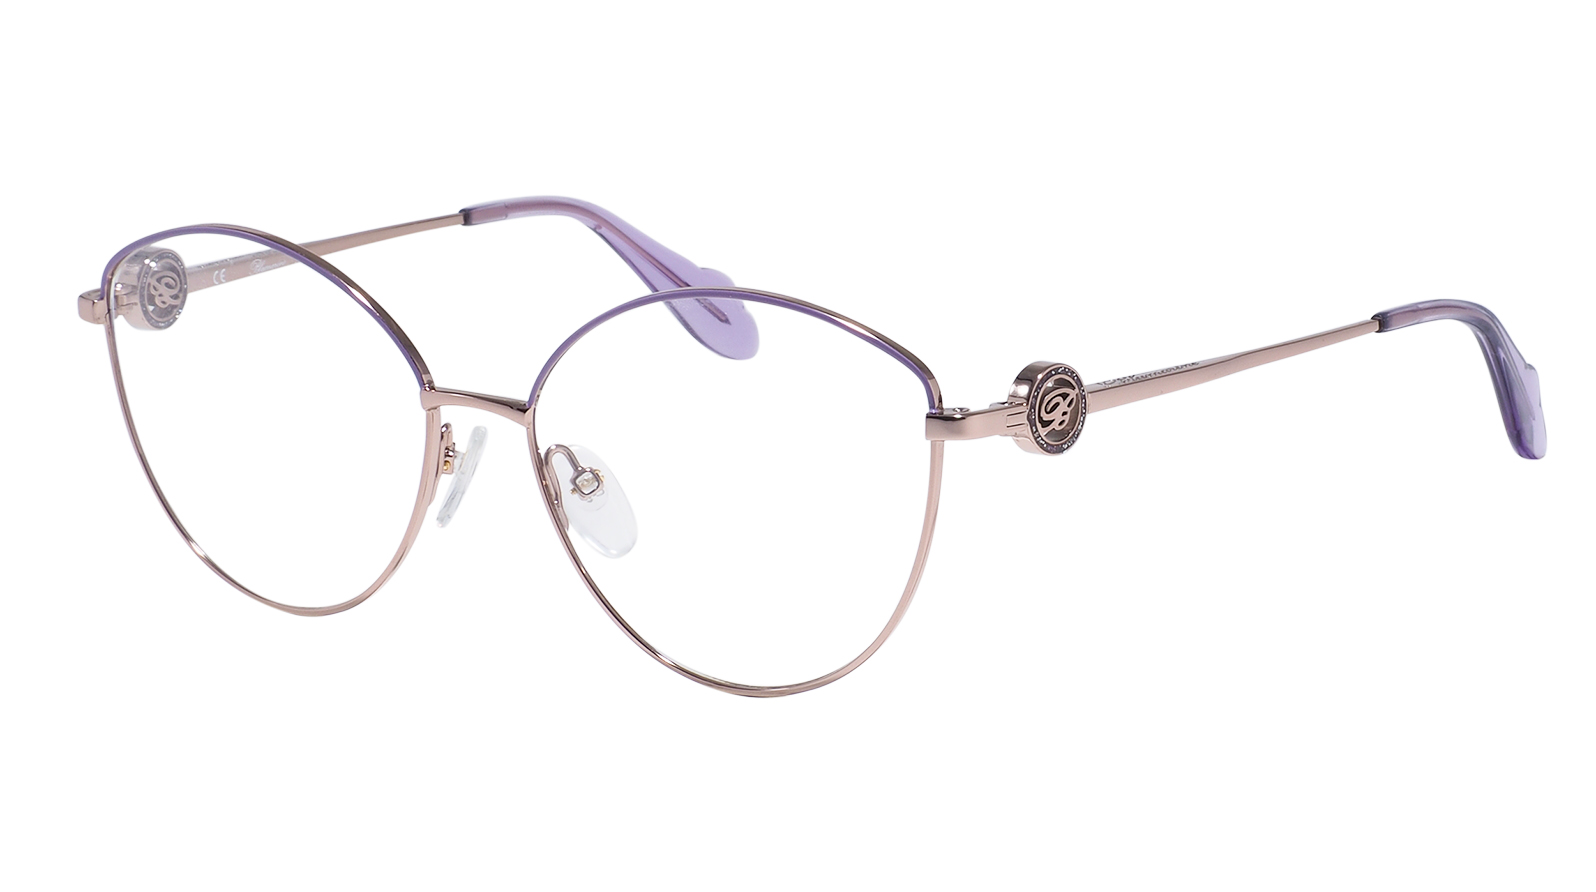 Blumarine 167 E59 очки salivio корригирующие женские с диоптриями 4 0